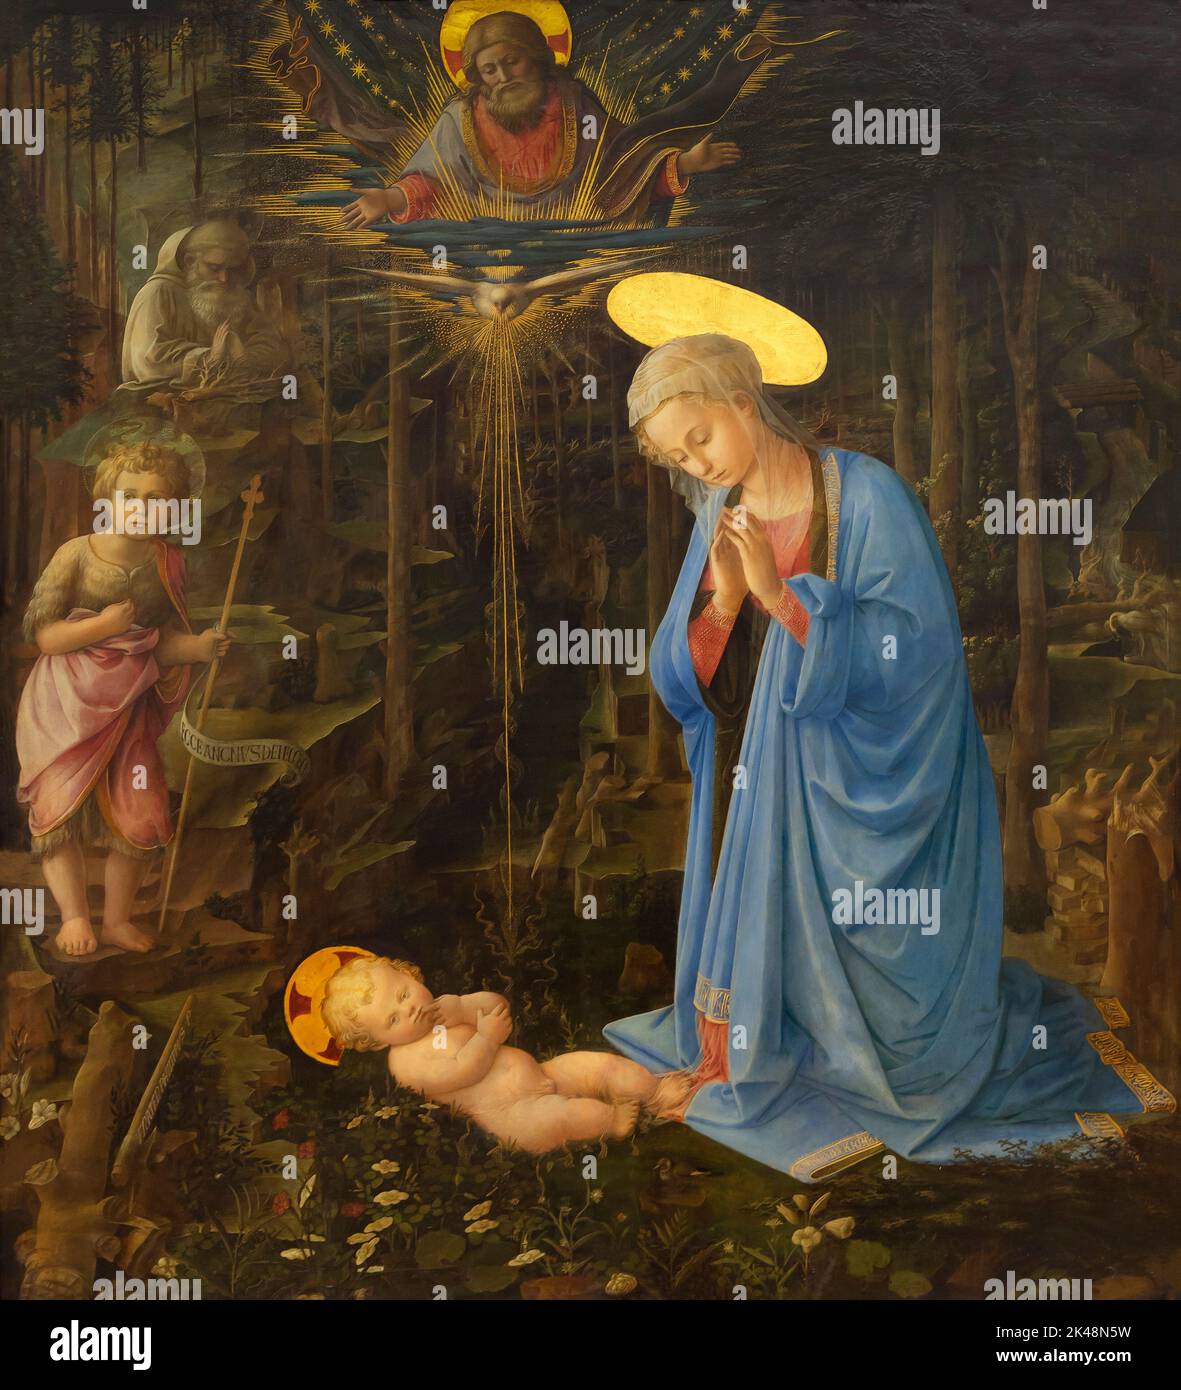 Mystical Nativity, Adoration in the Forest, Filippo Lippi, circa 1459, Gemaldegalerie, Berlin, Germany, Europe Stock Photo